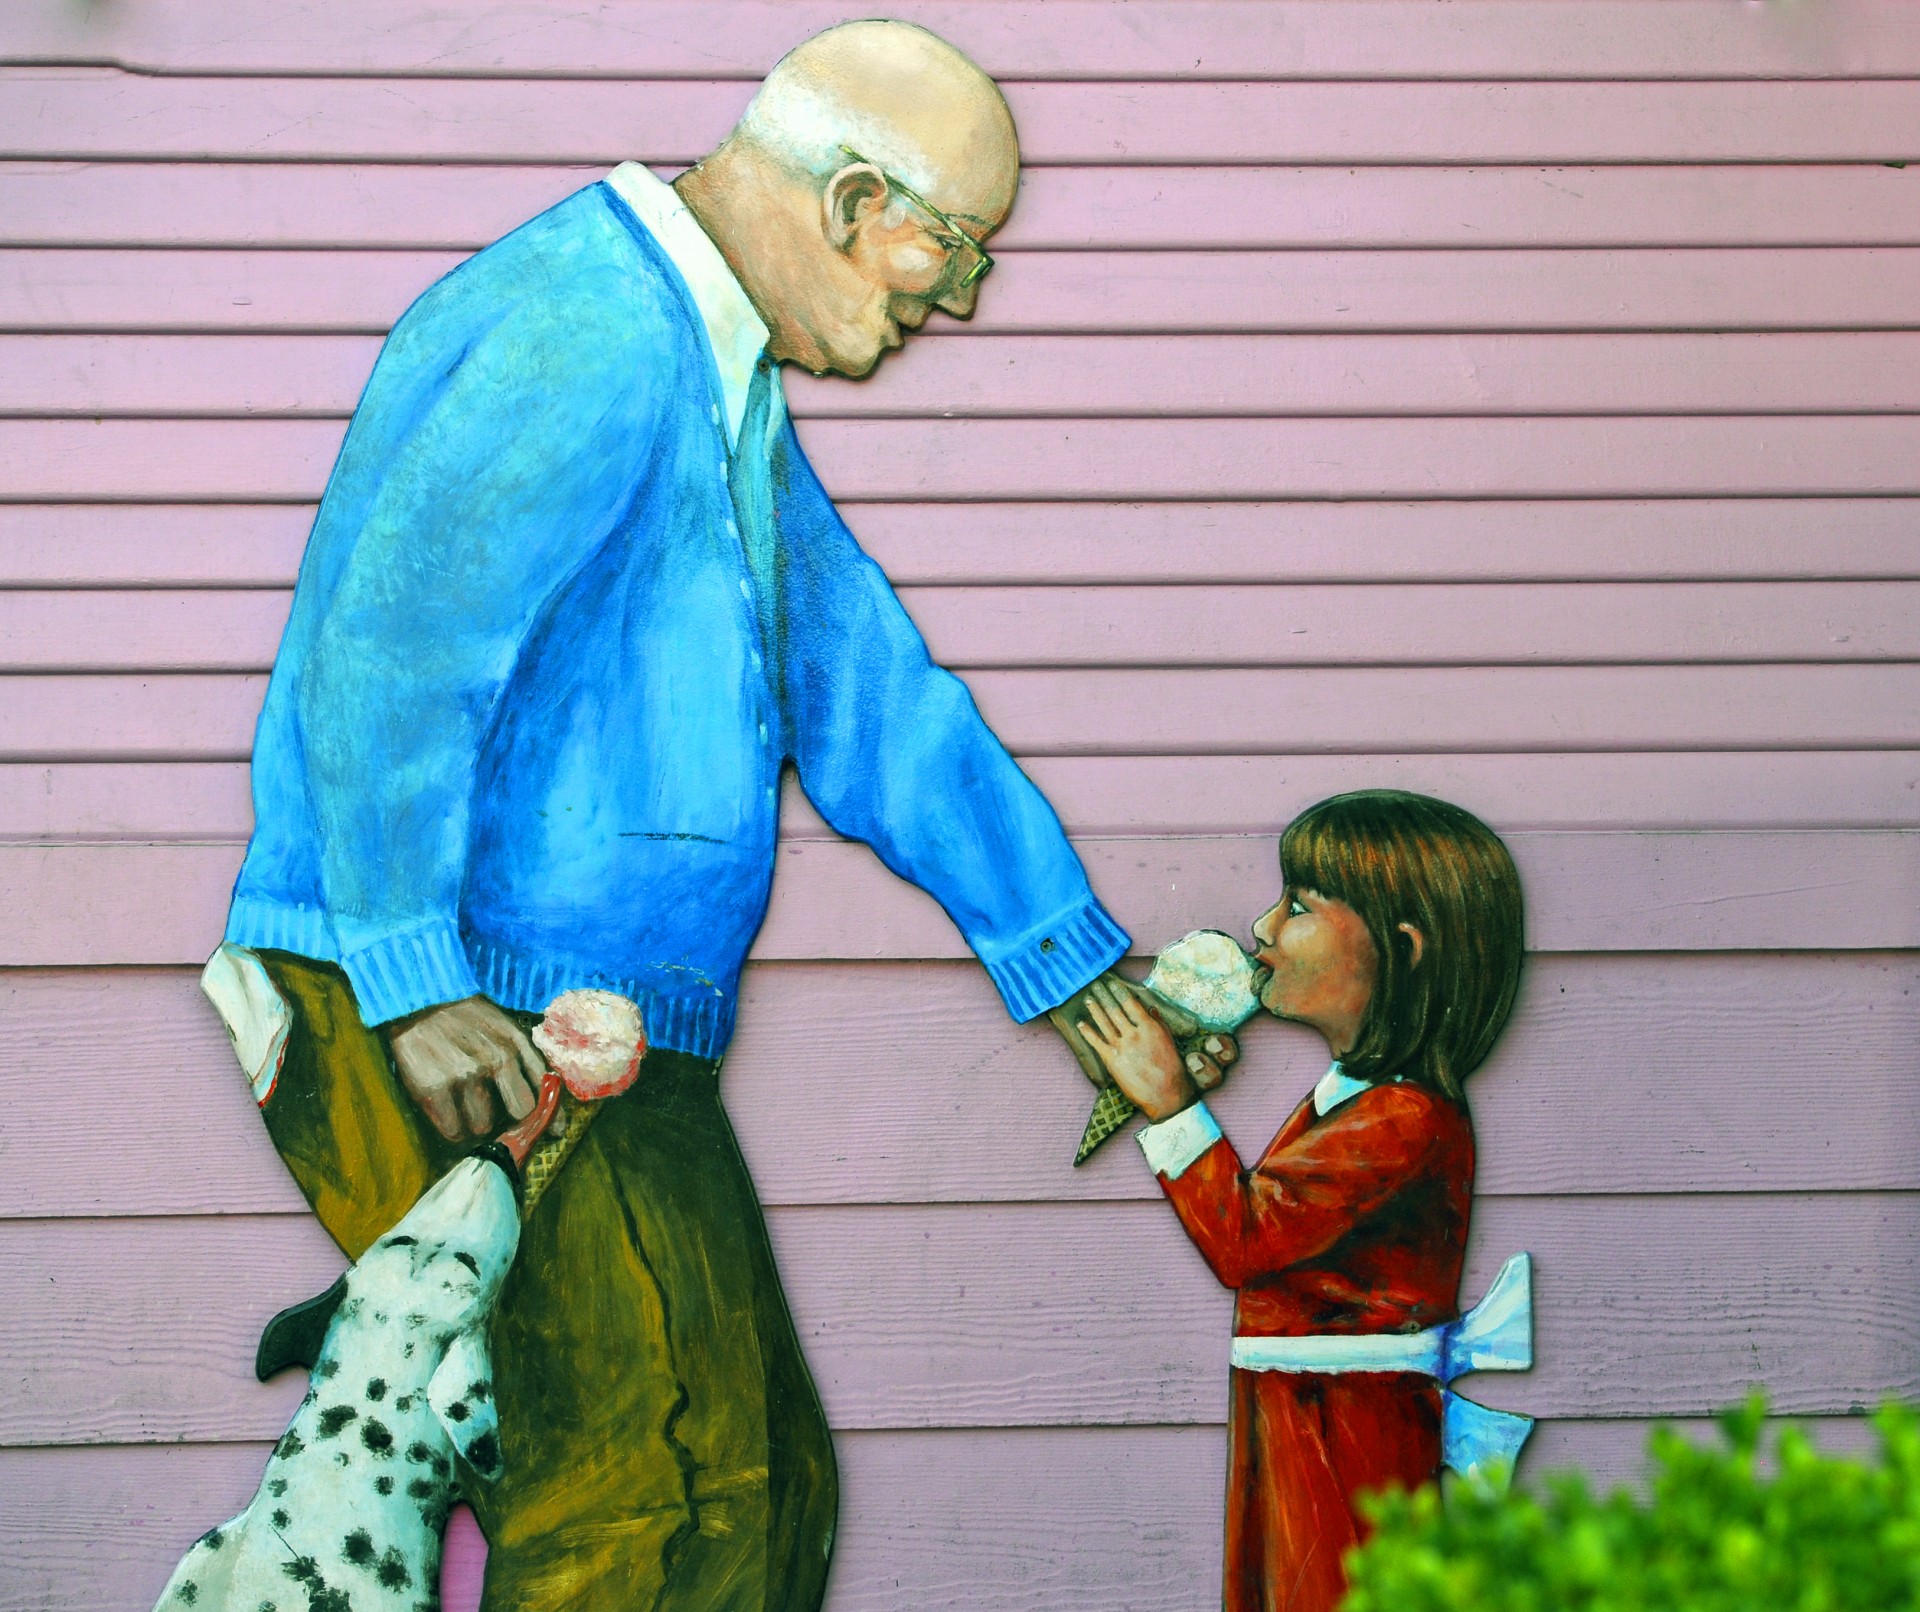 Ice creme,mural,painting,grandpa,grandparent - free image from needpix.com.